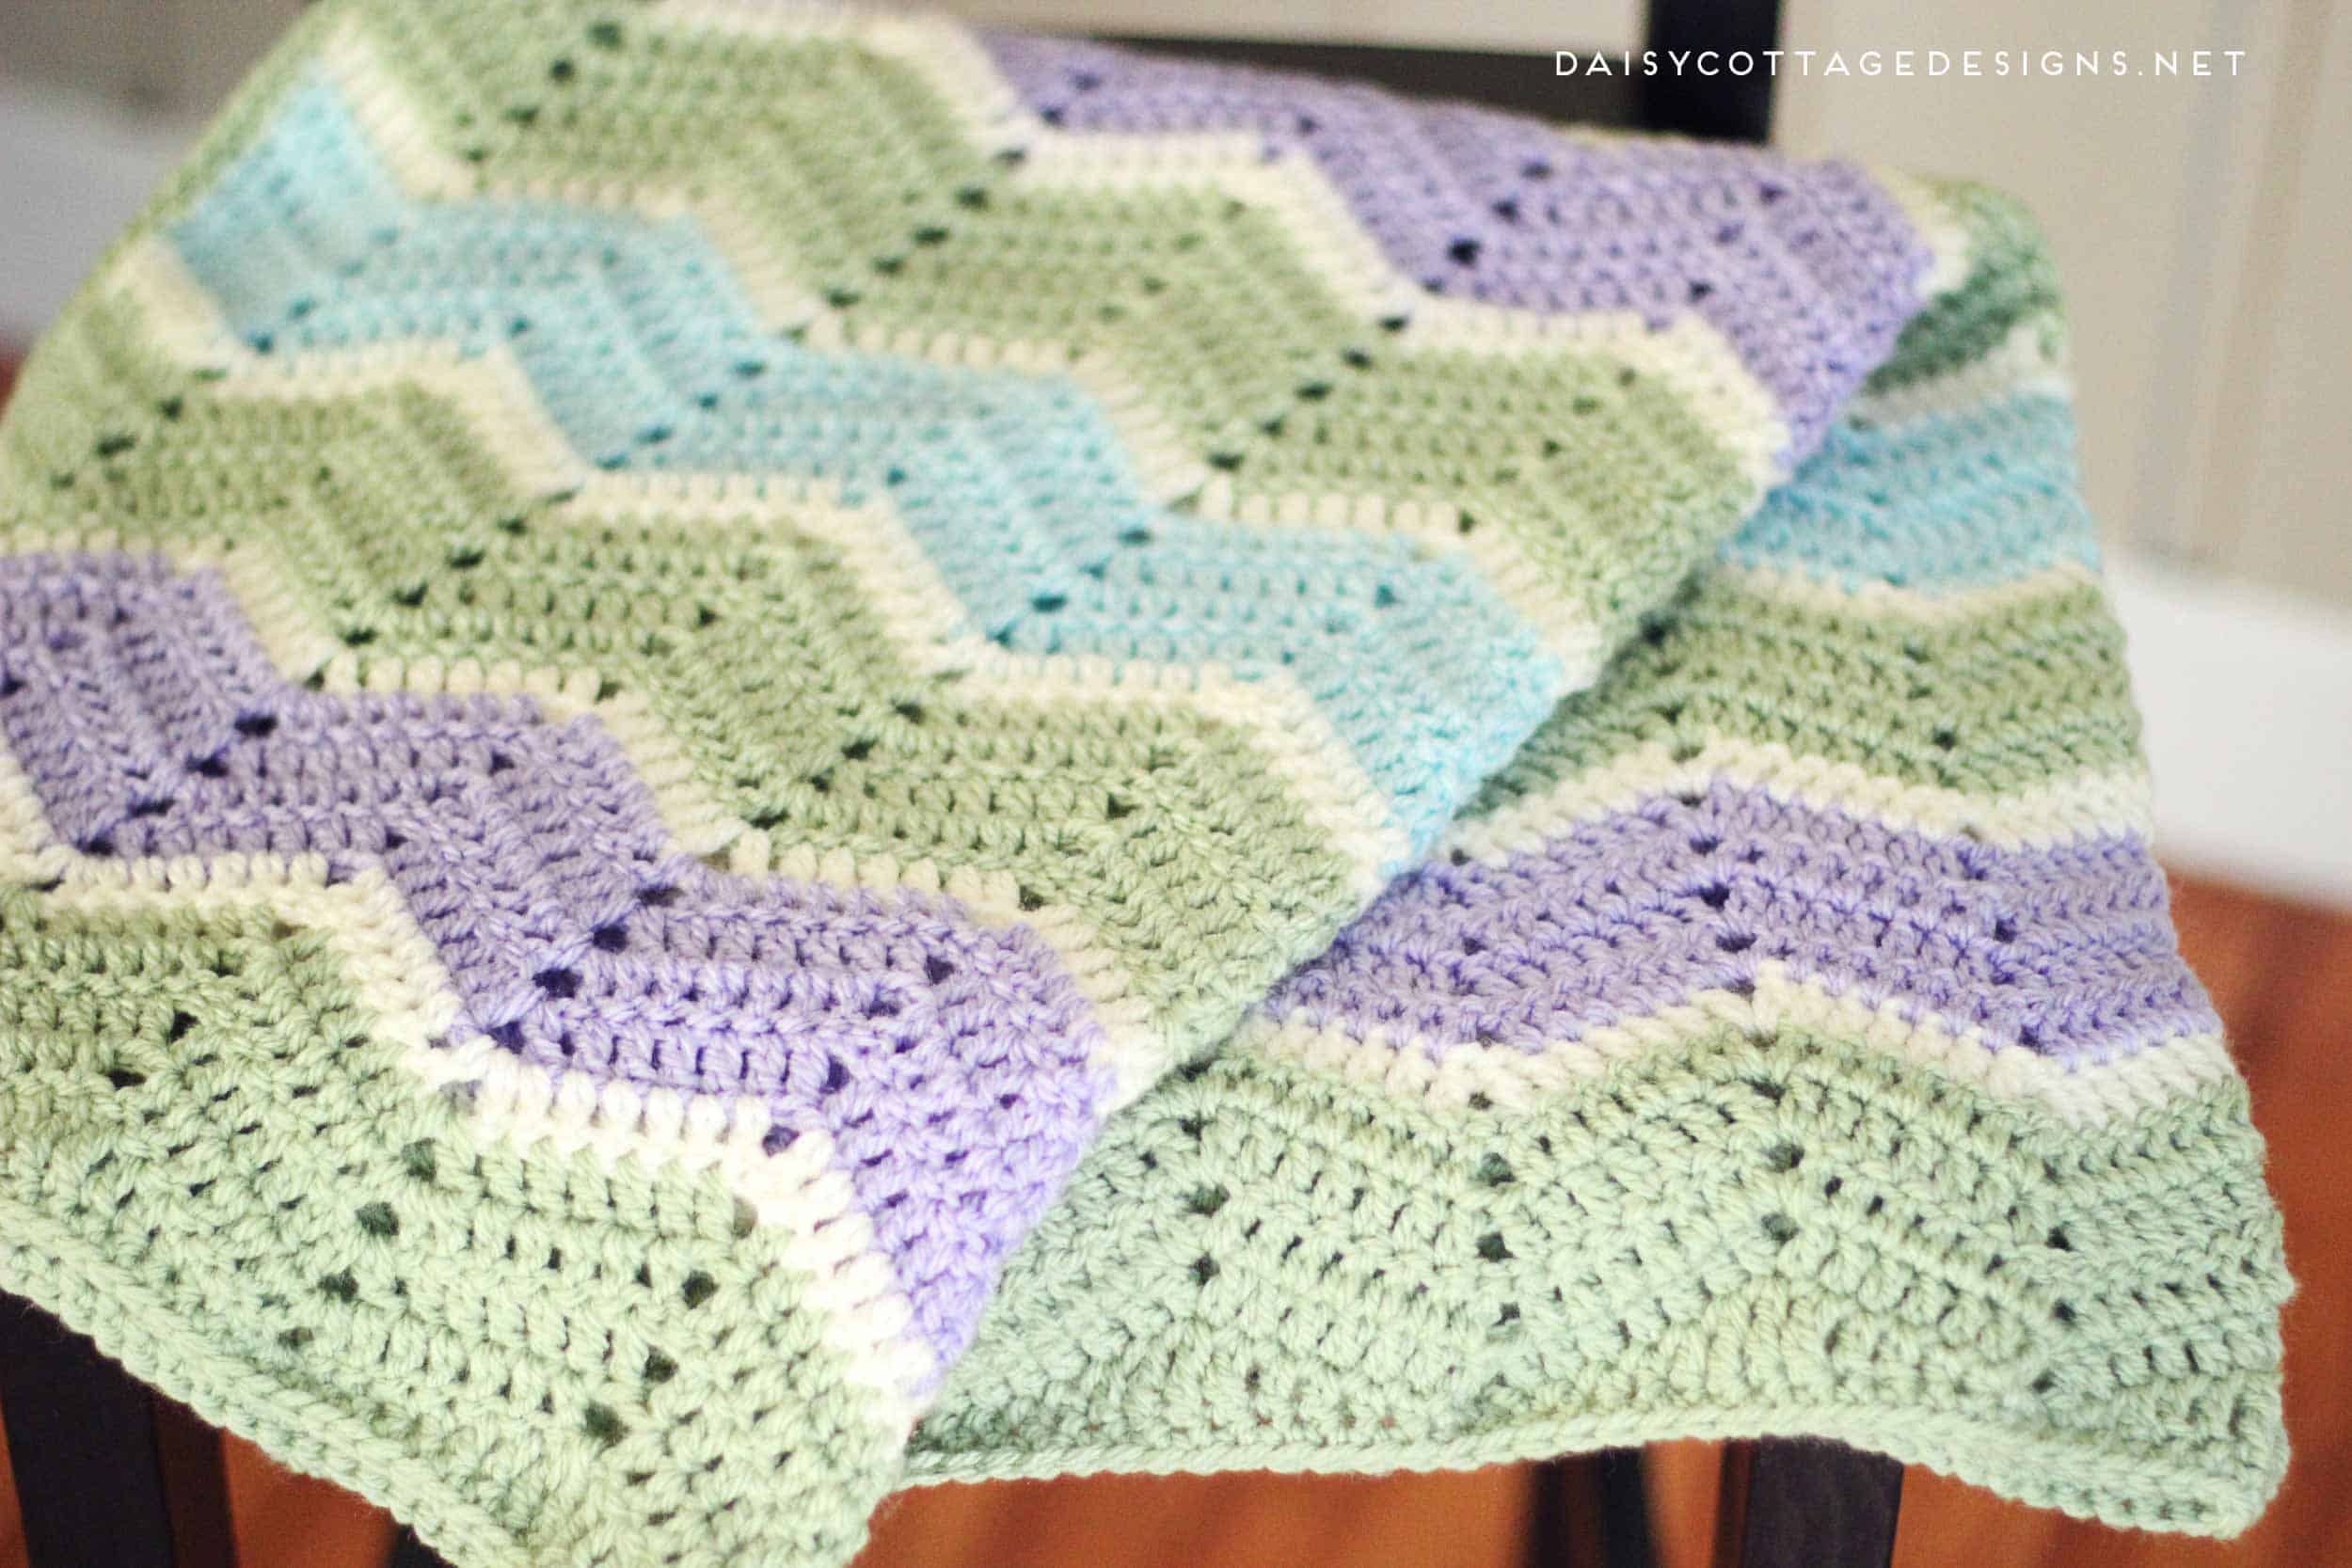 Easy Chevron Blanket Crochet Pattern Daisy Cottage Designs,Fried Corn Recipe